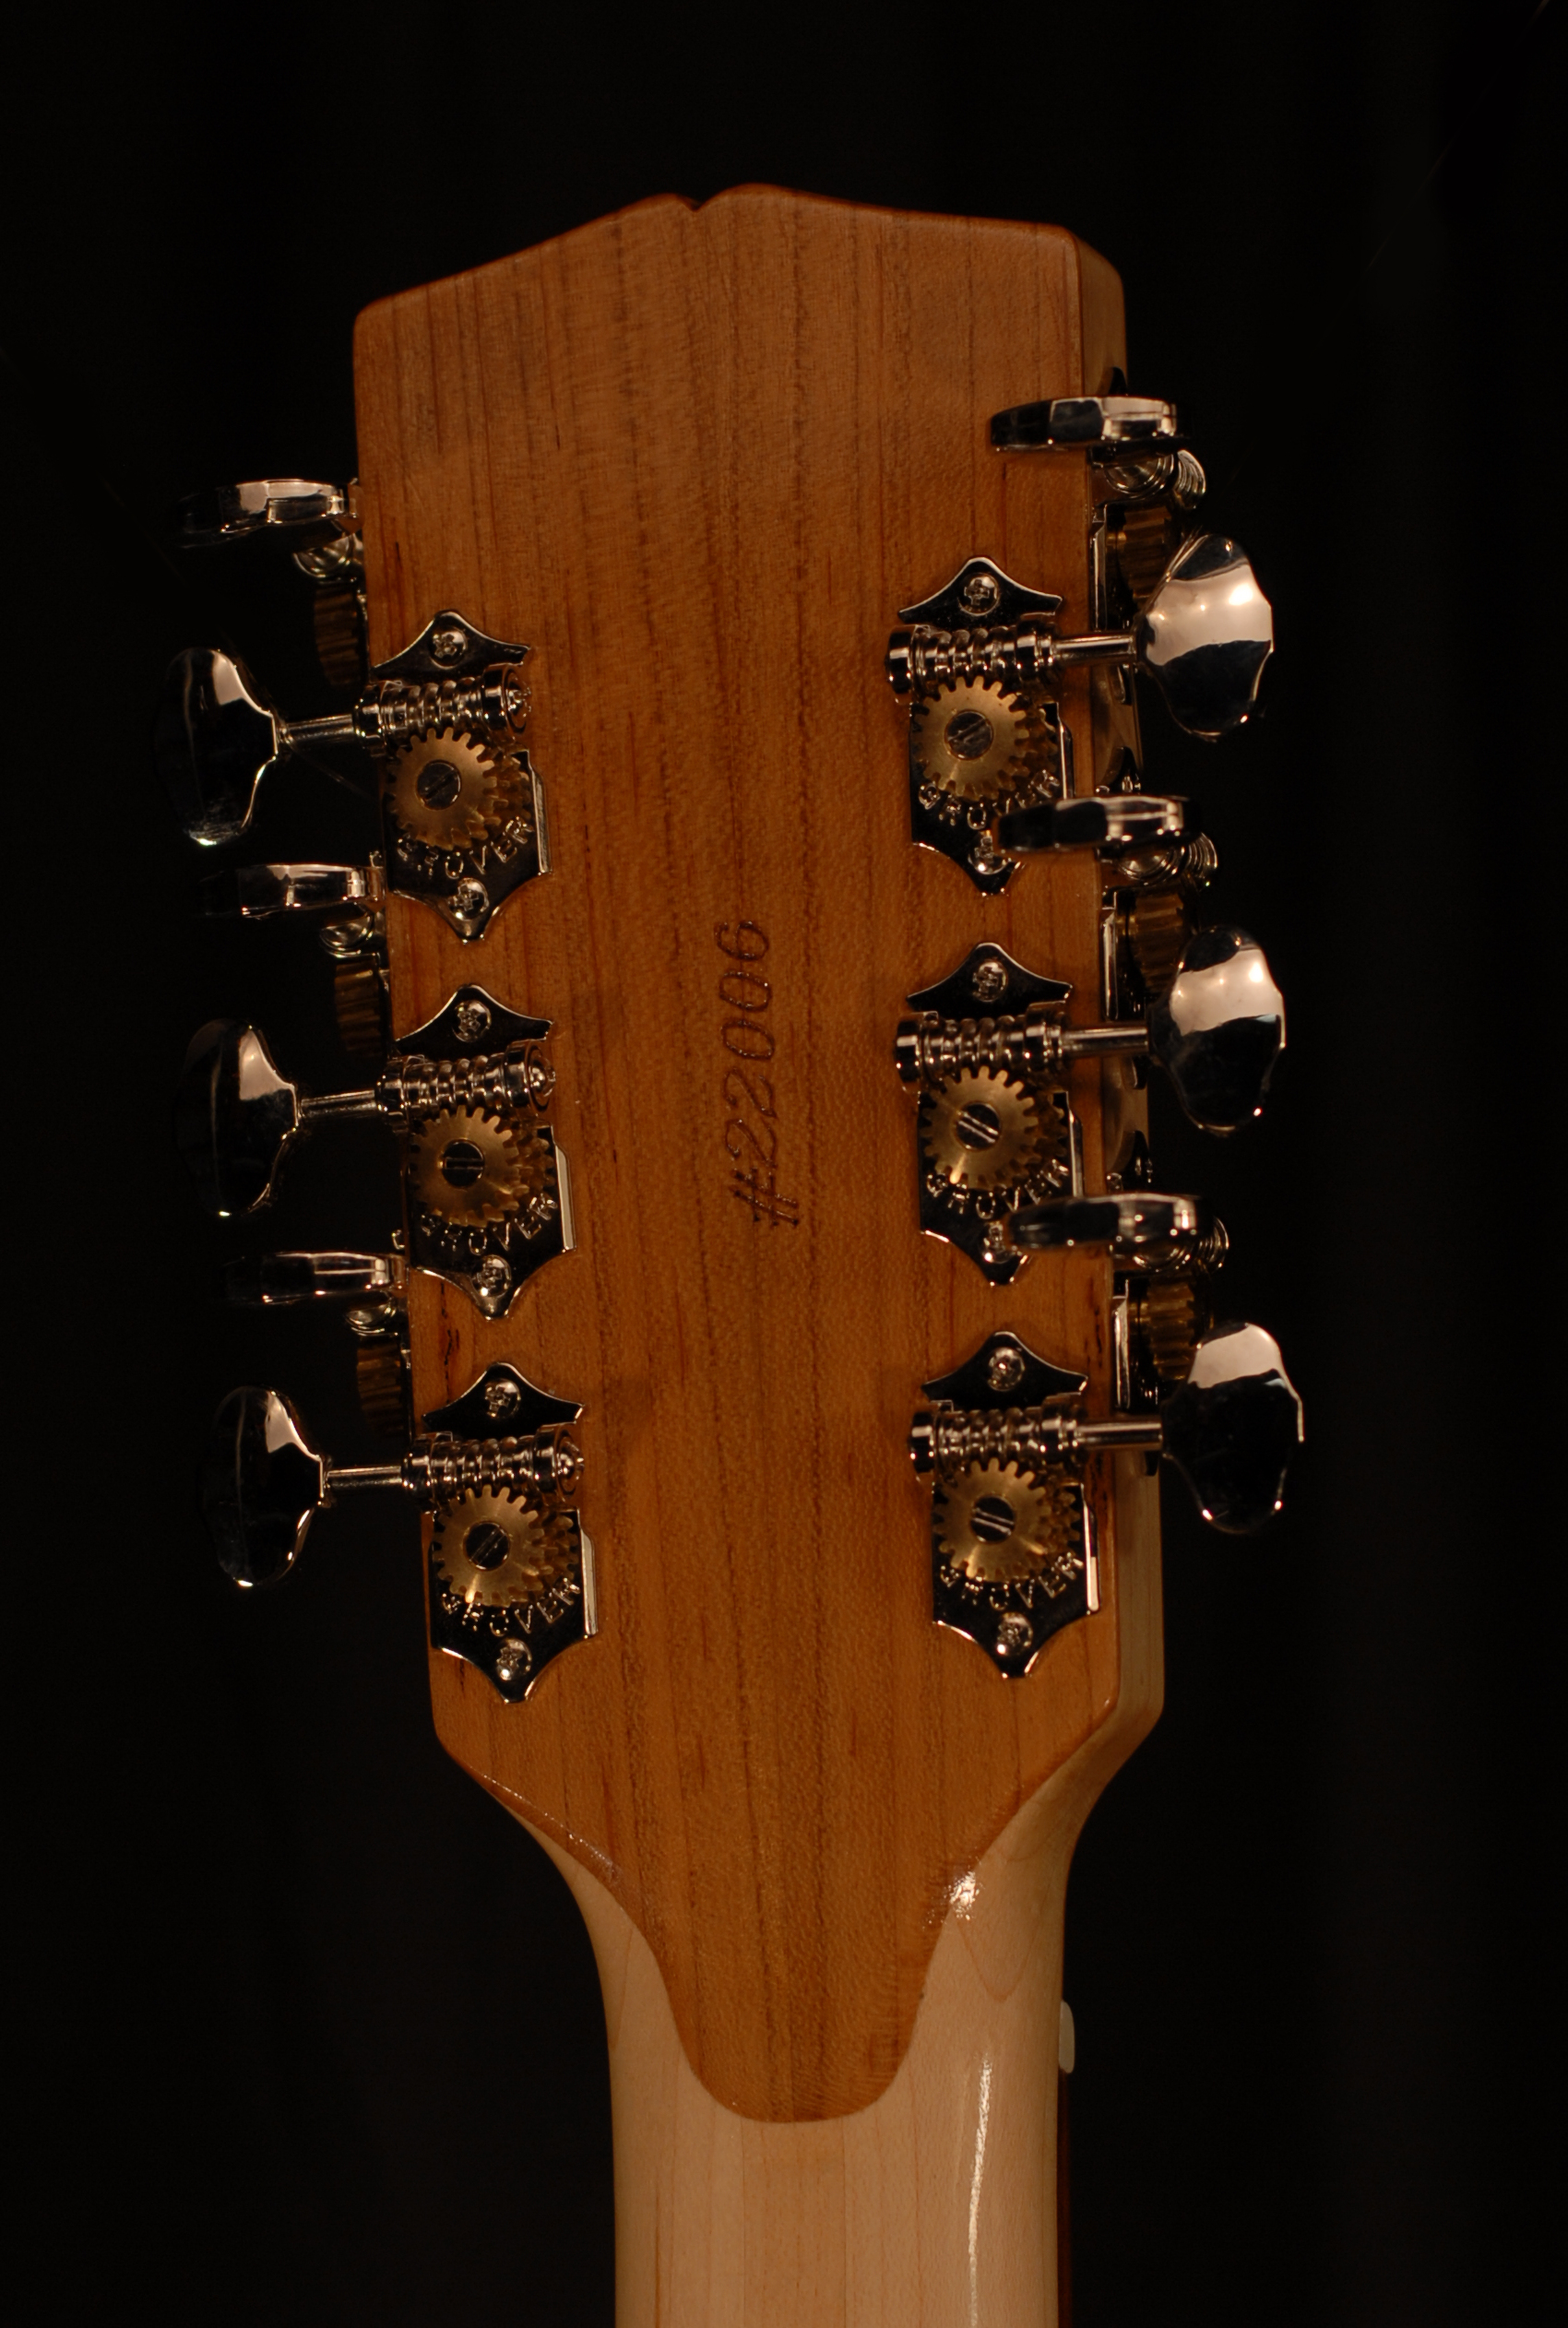 head rear view of michael mccarten's double cutaway Electric 12 string guitar model